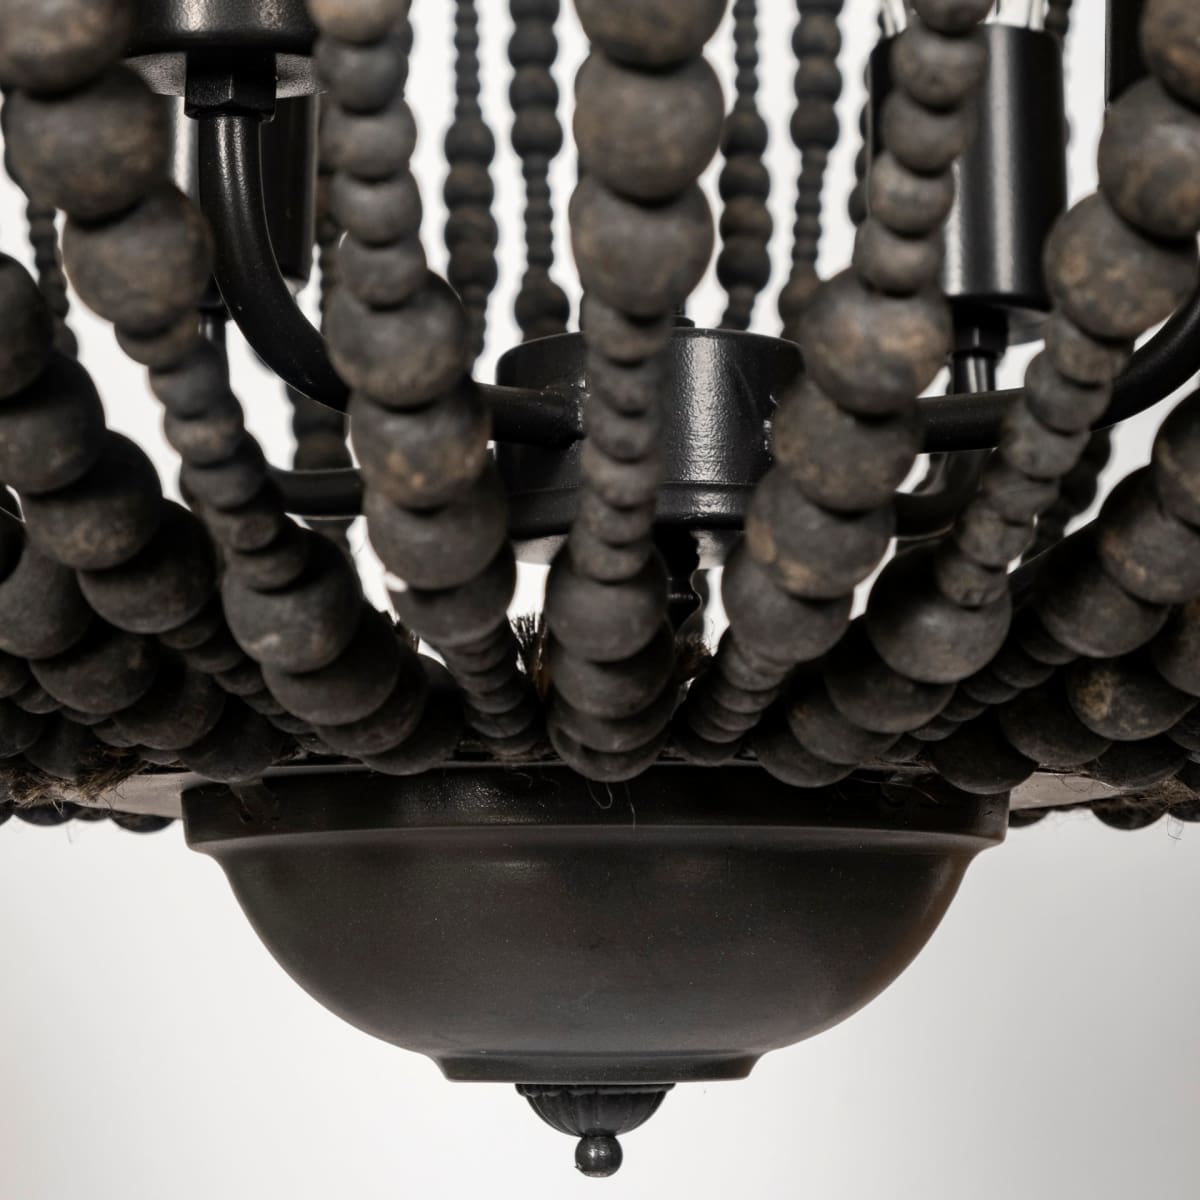 Liam Chandelier Black Wood - chandeliers